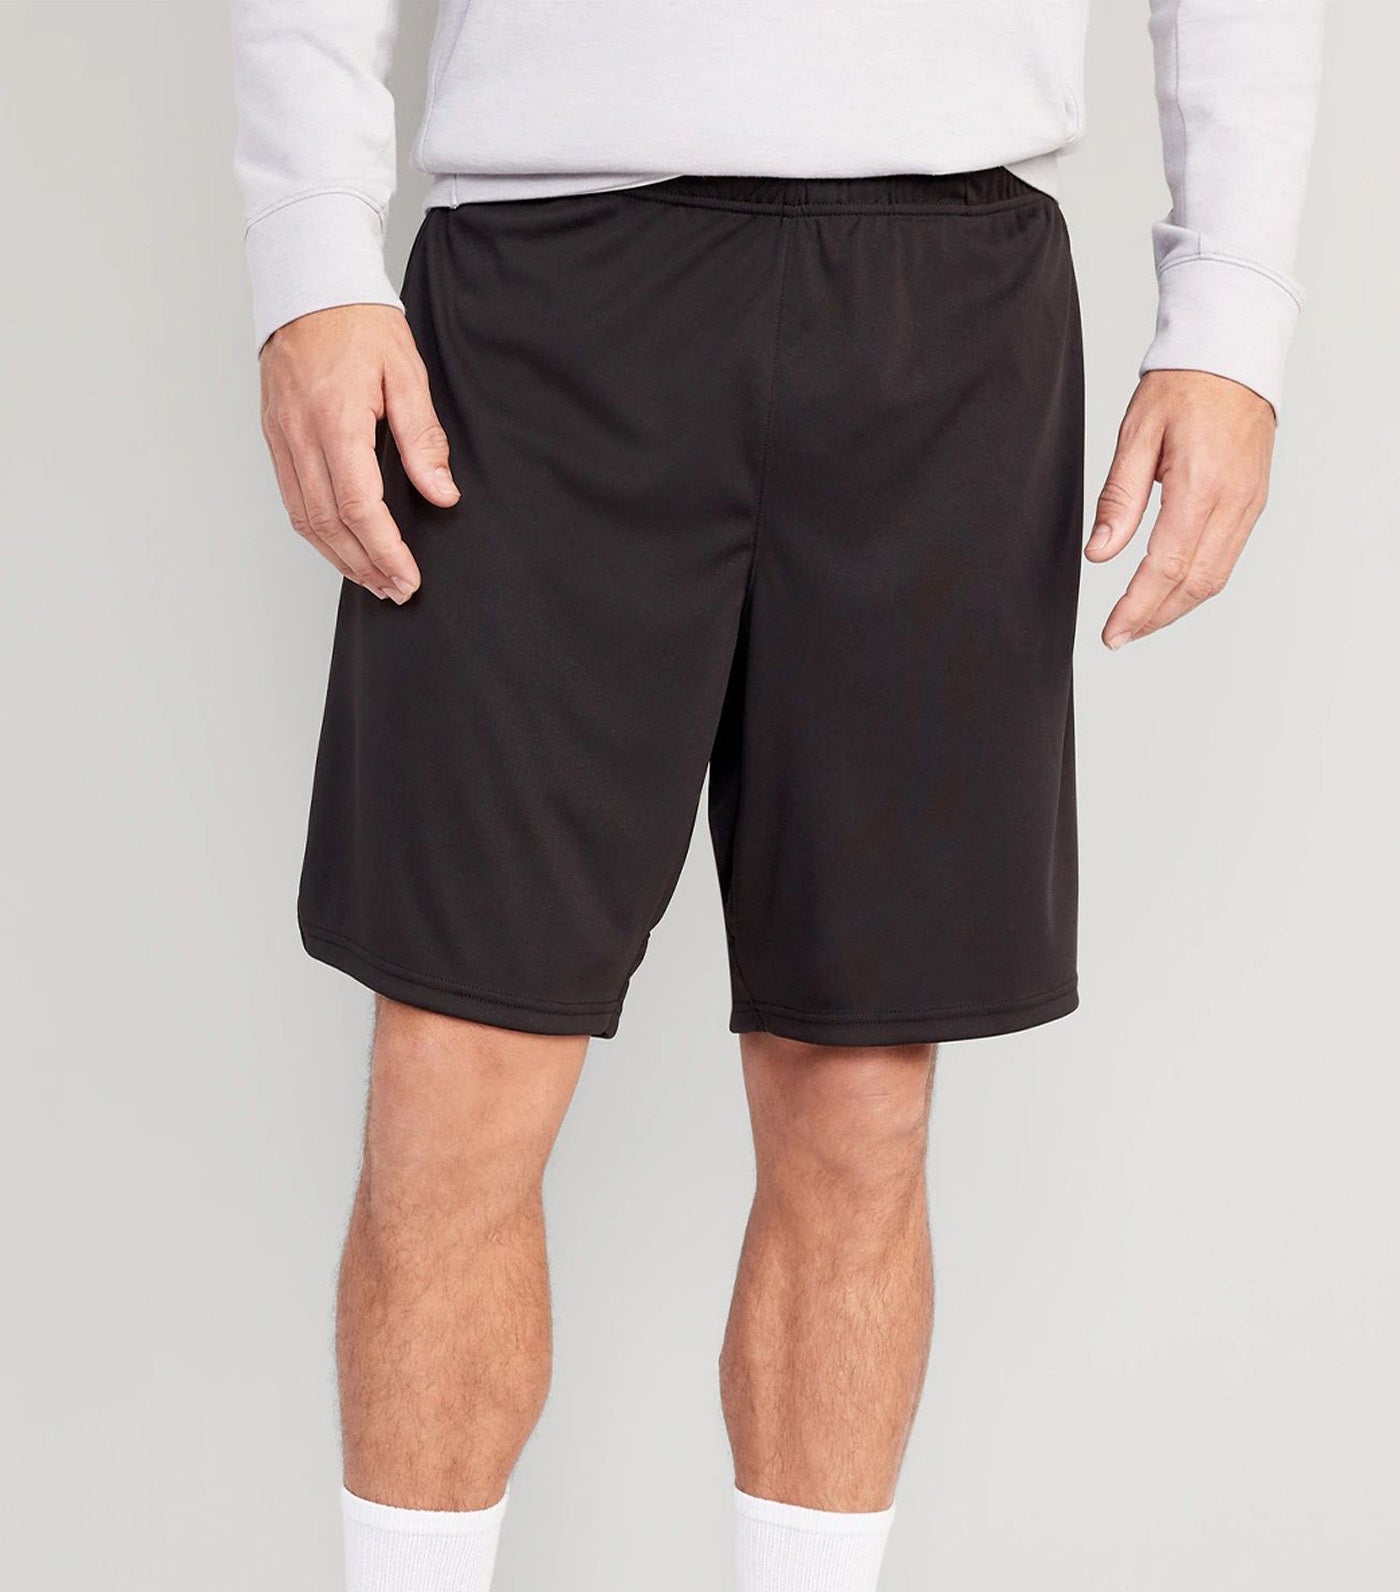 Go-Dry Mesh Basketball Shorts for Men - 9-inch inseam Black Jack